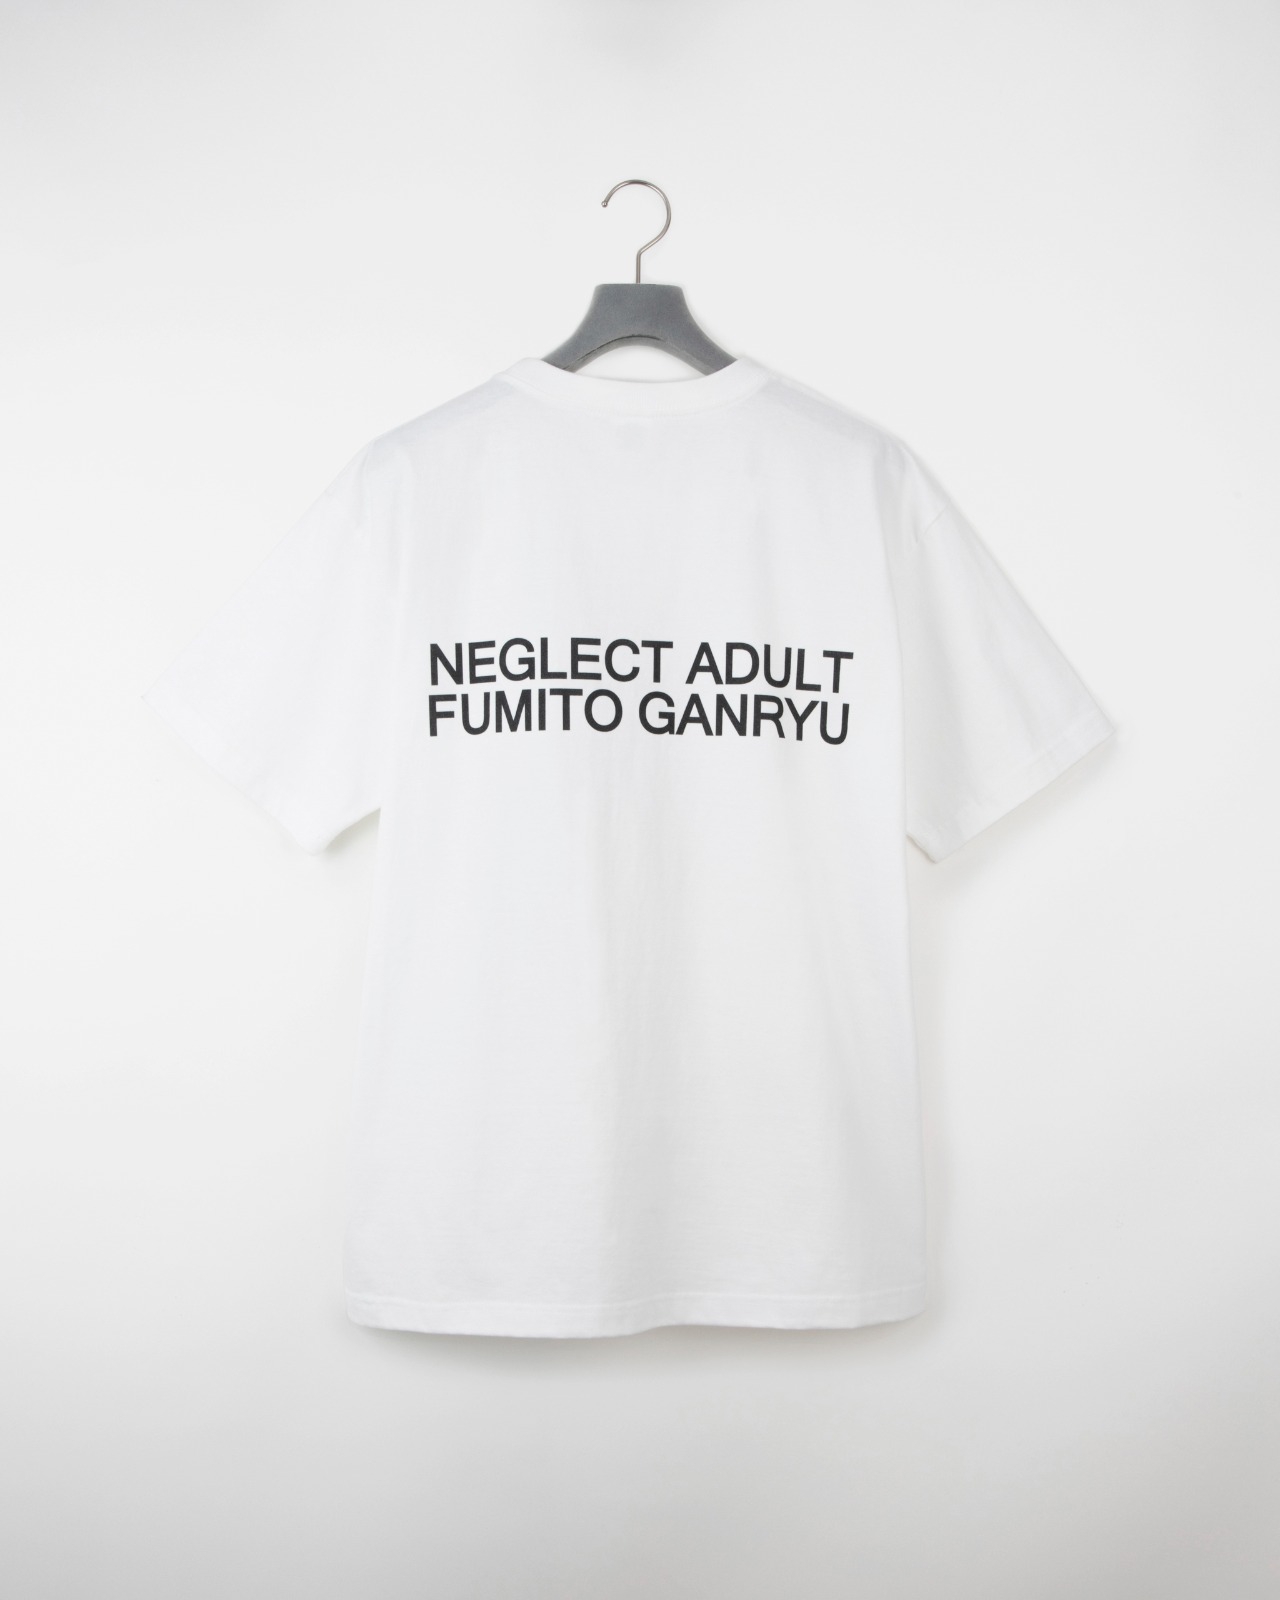 Neglect Adult Patients Tシャツ